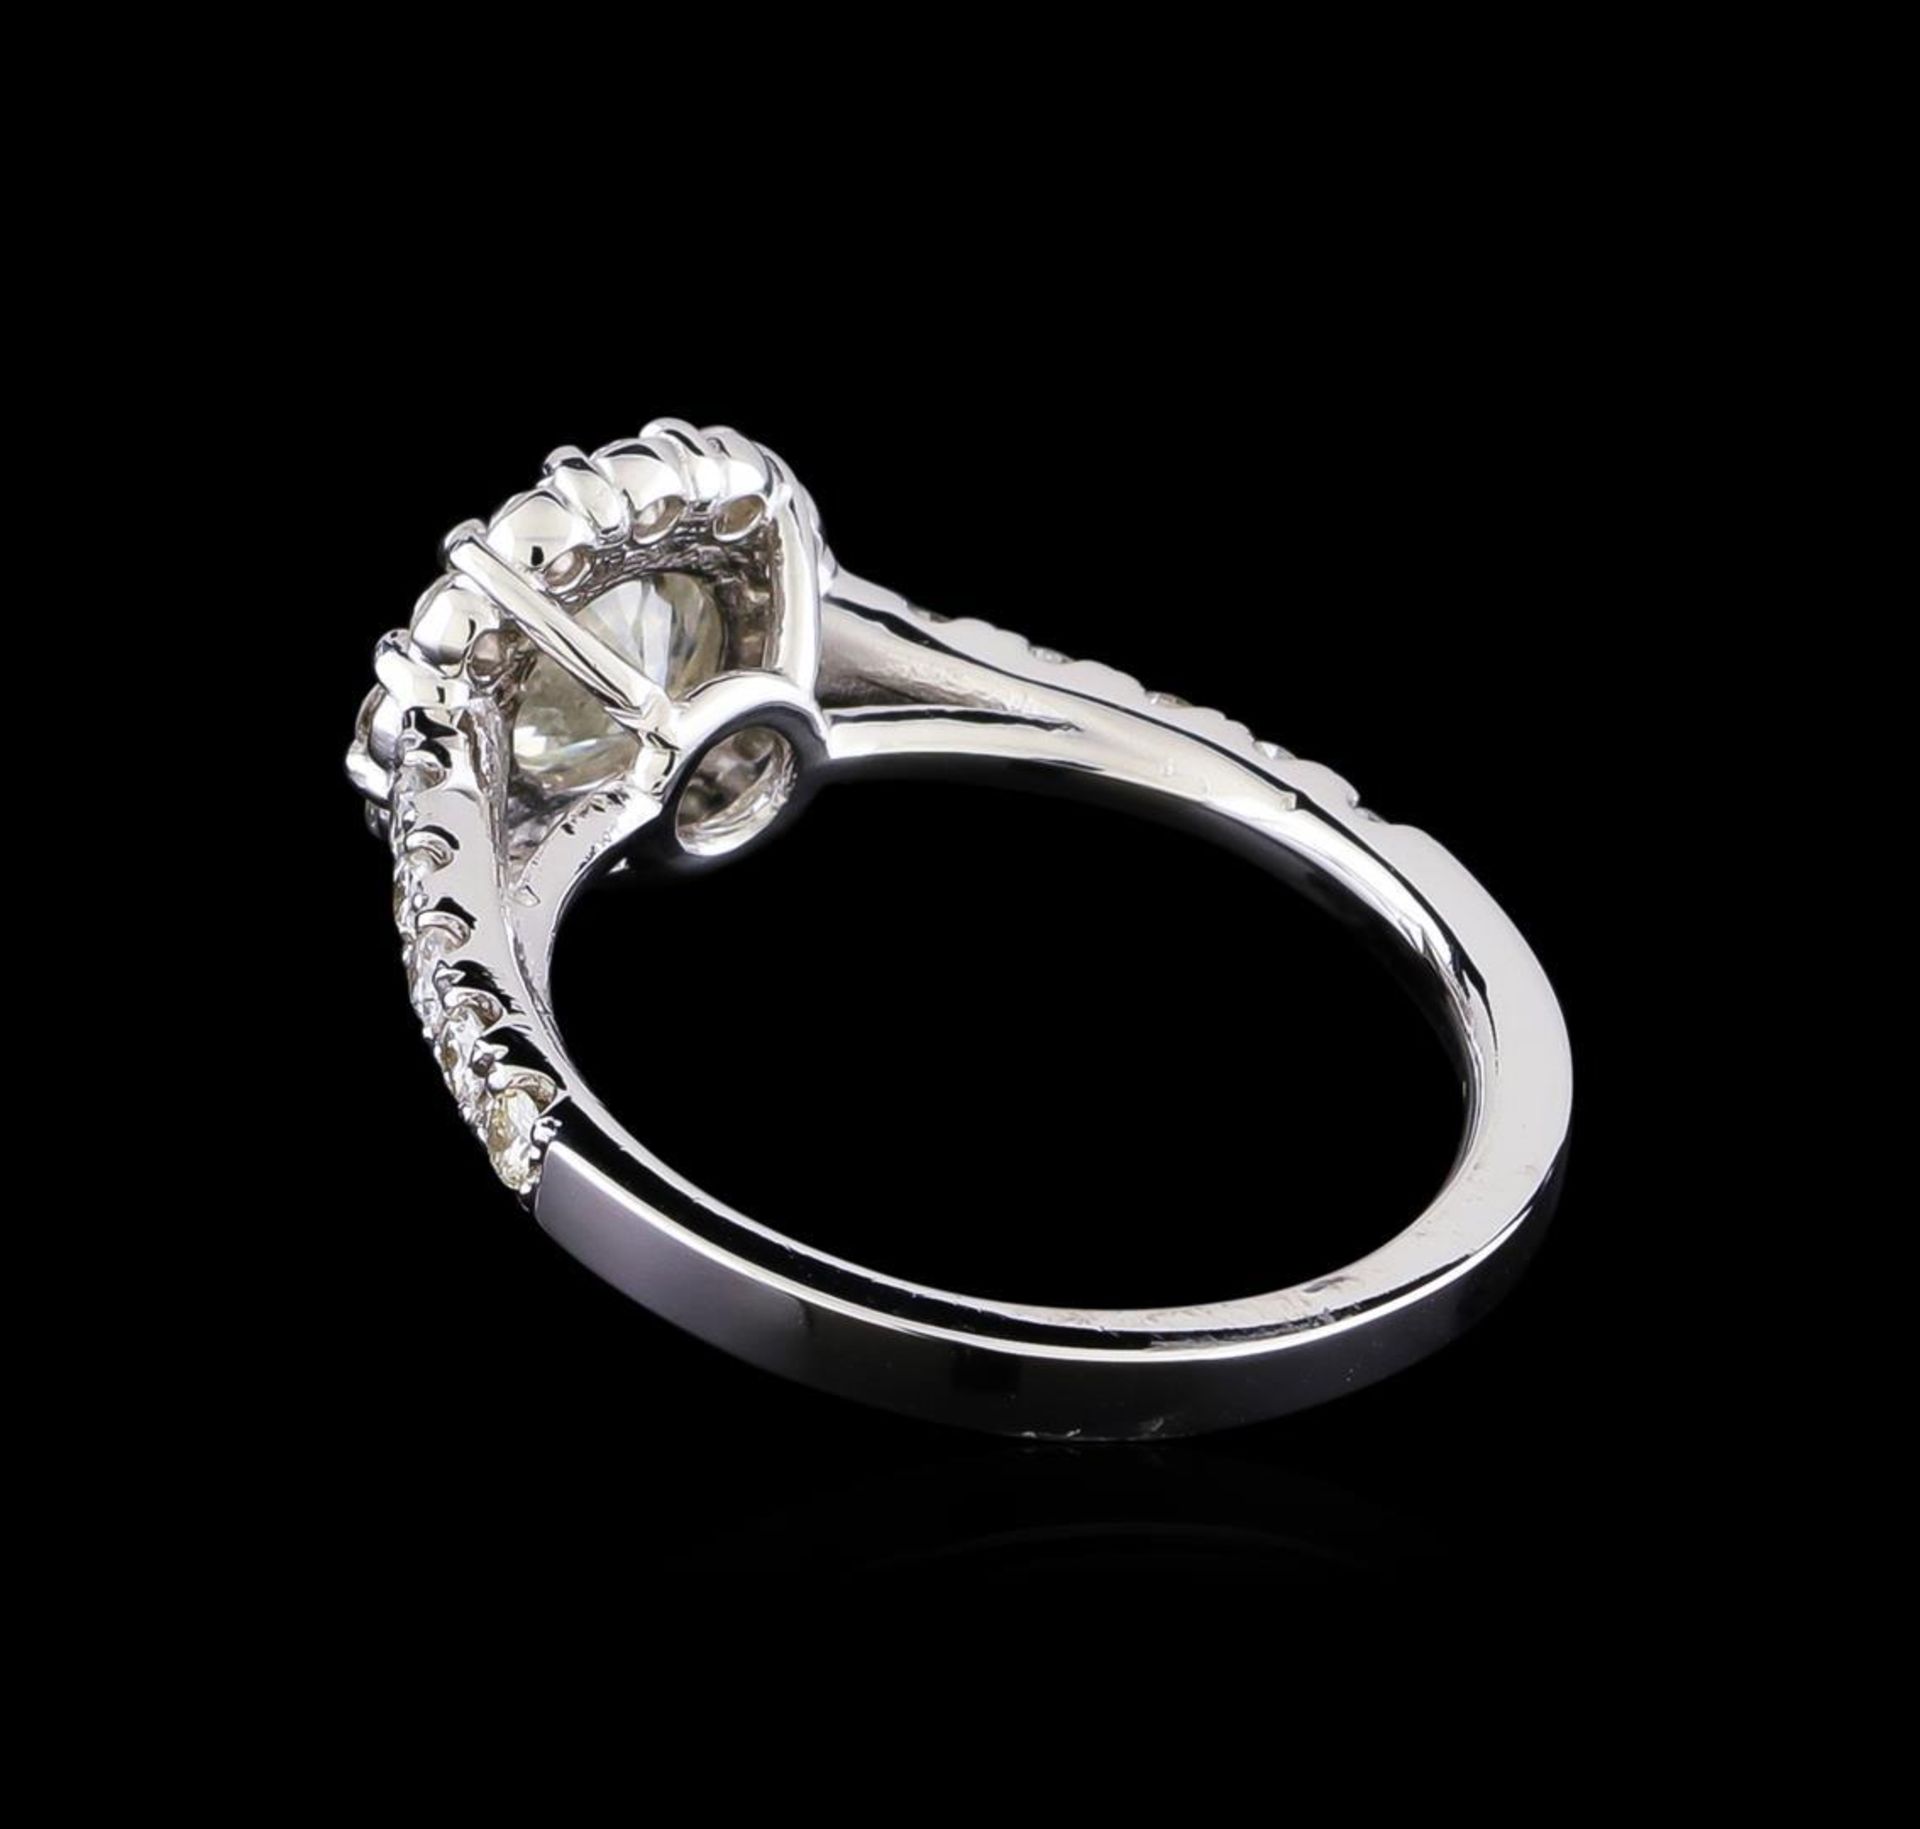 1.52 ctw Diamond Ring - 14KT White Gold - Image 3 of 5